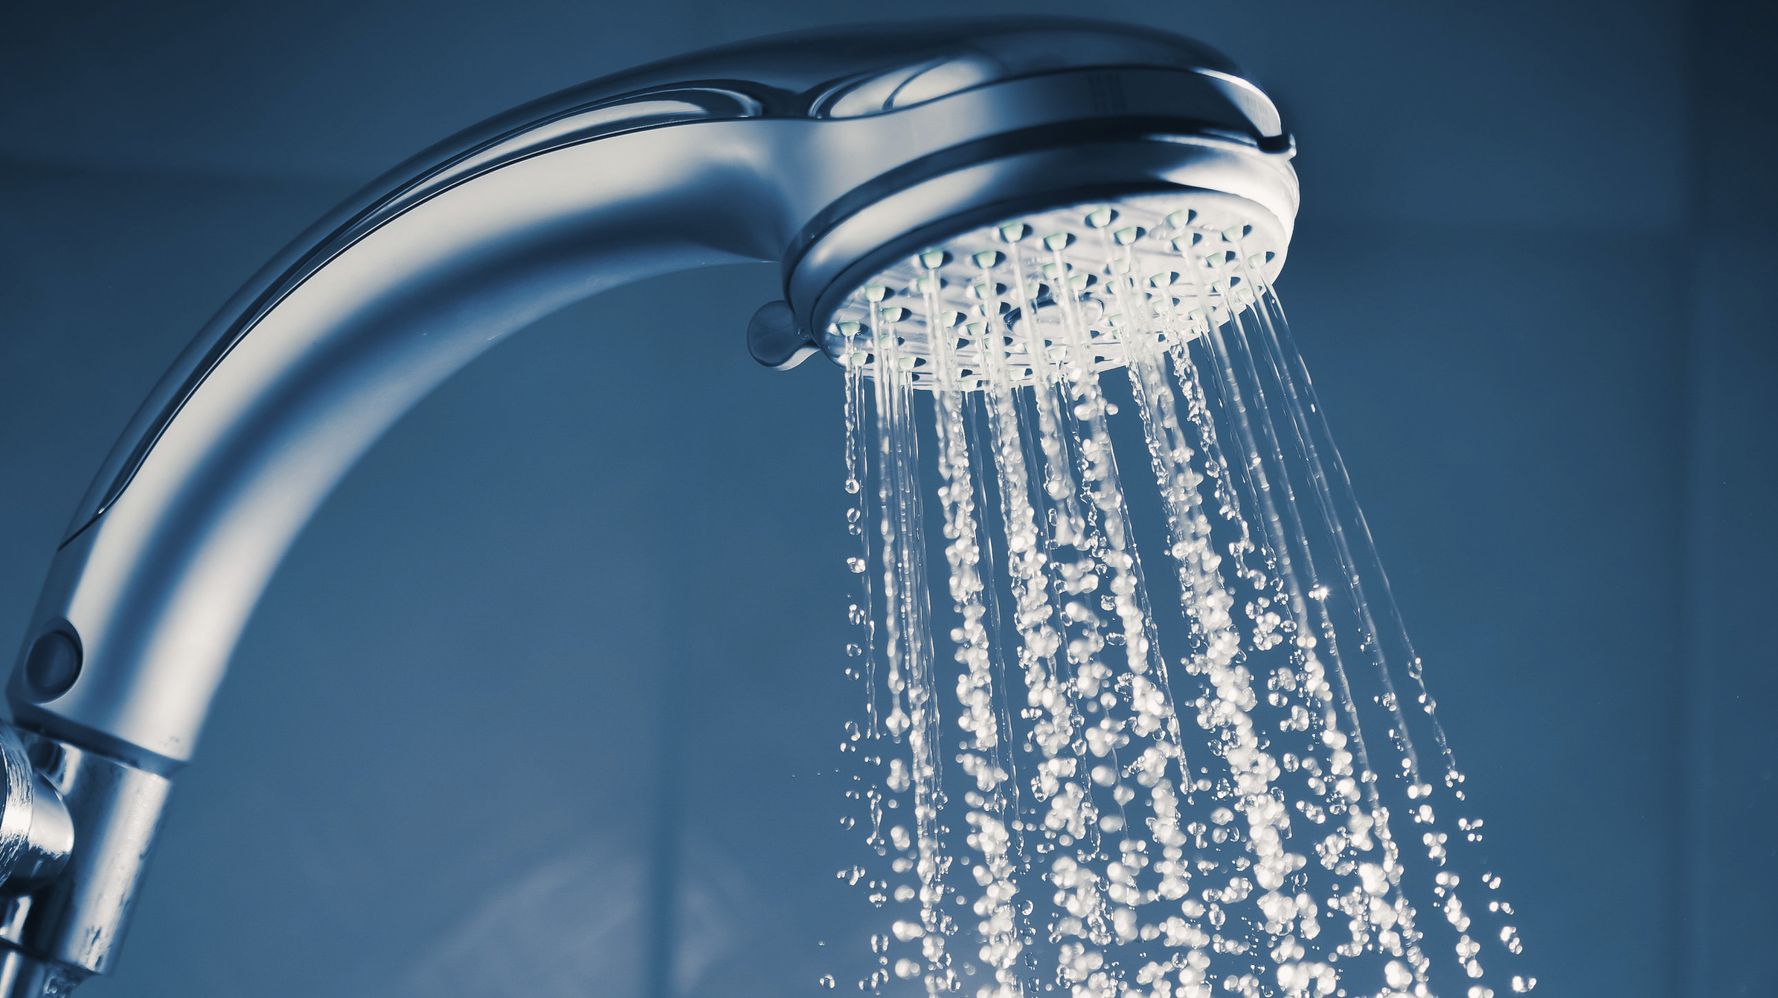 7 Shower Mistakes to Avoid for Healthier Skin